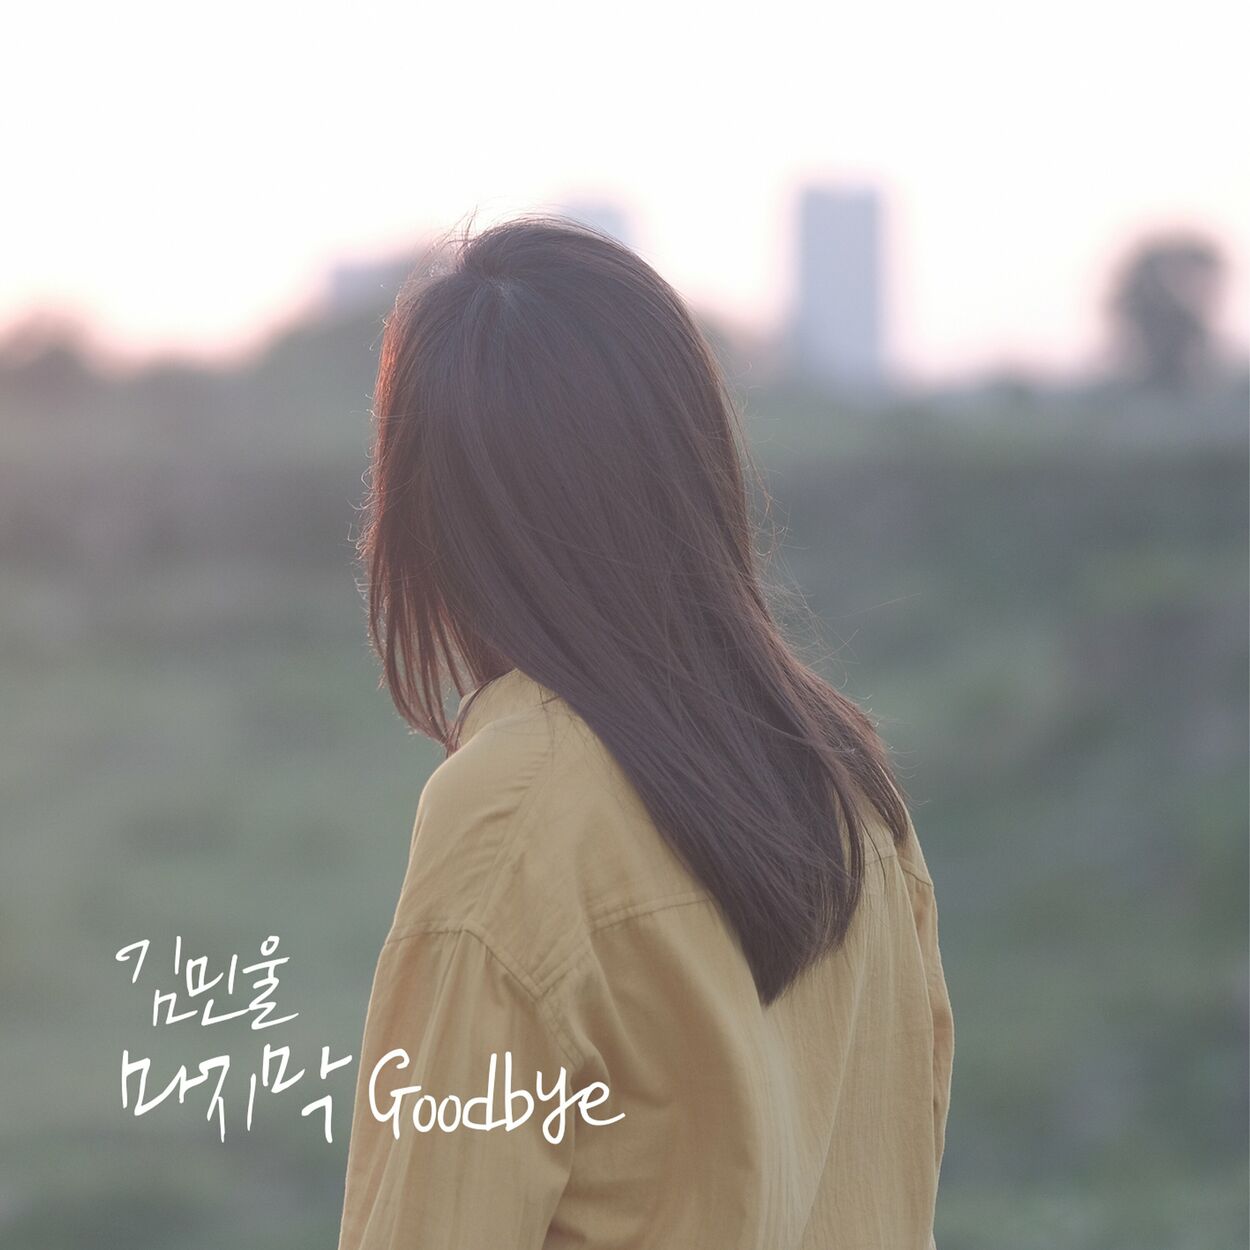 Kim Min Wool – Last Goodbye – Single